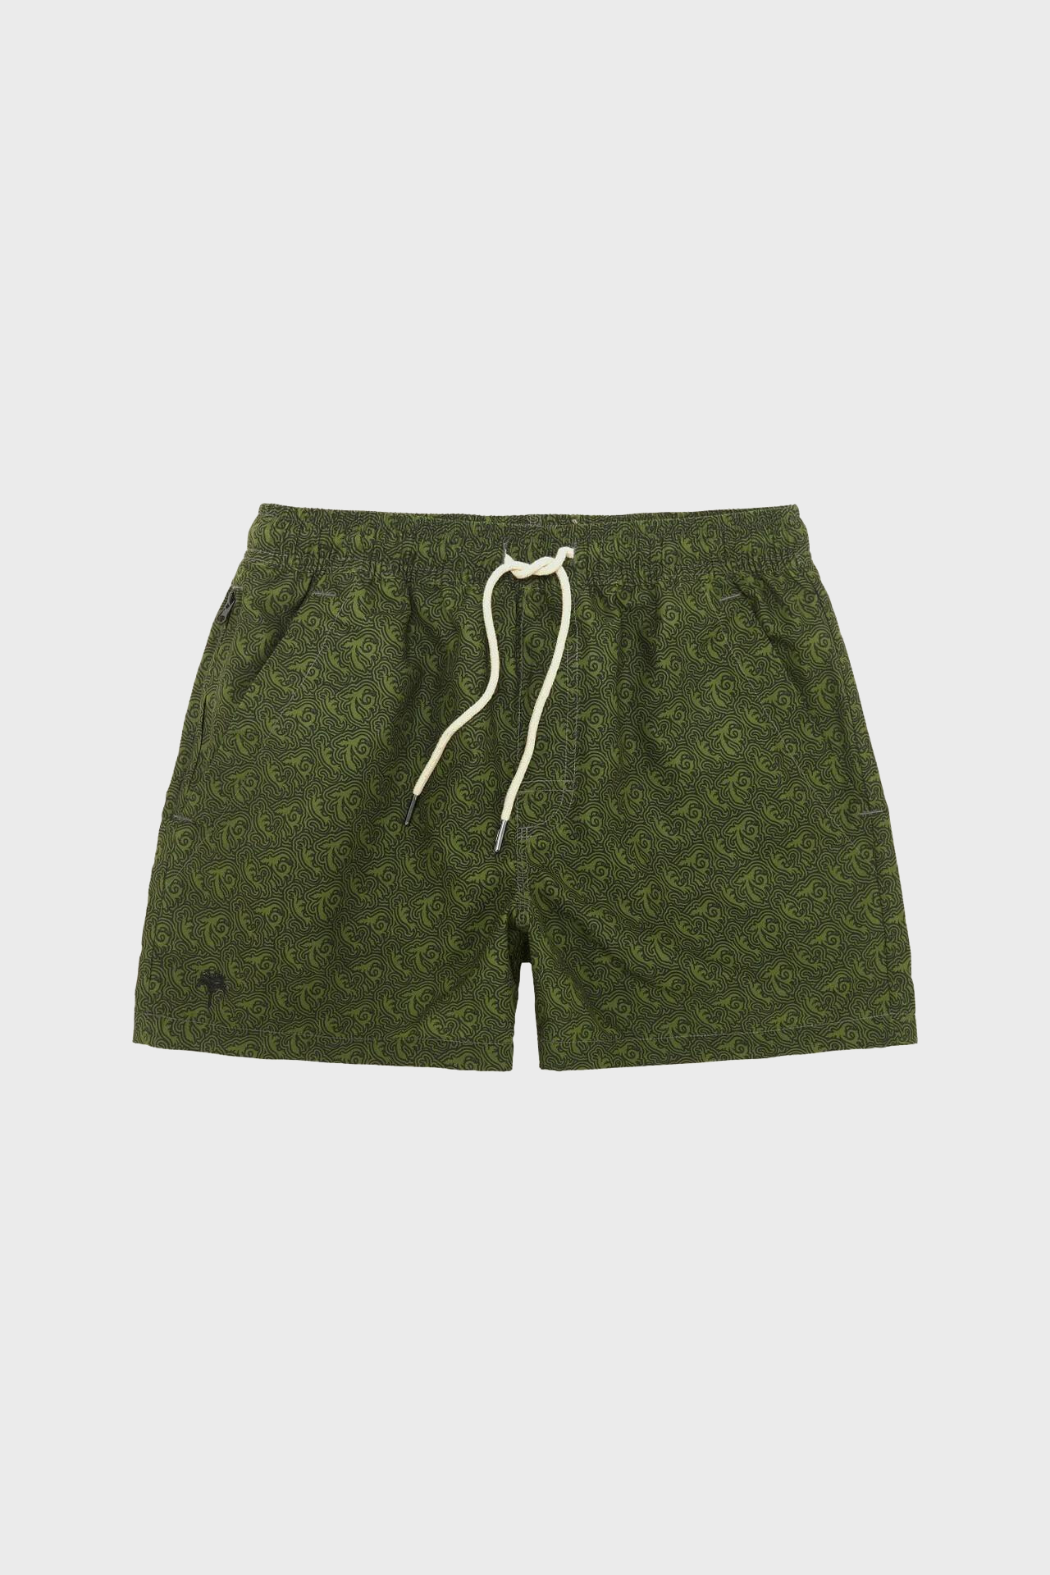 Swim Shorts in Green Squiggle